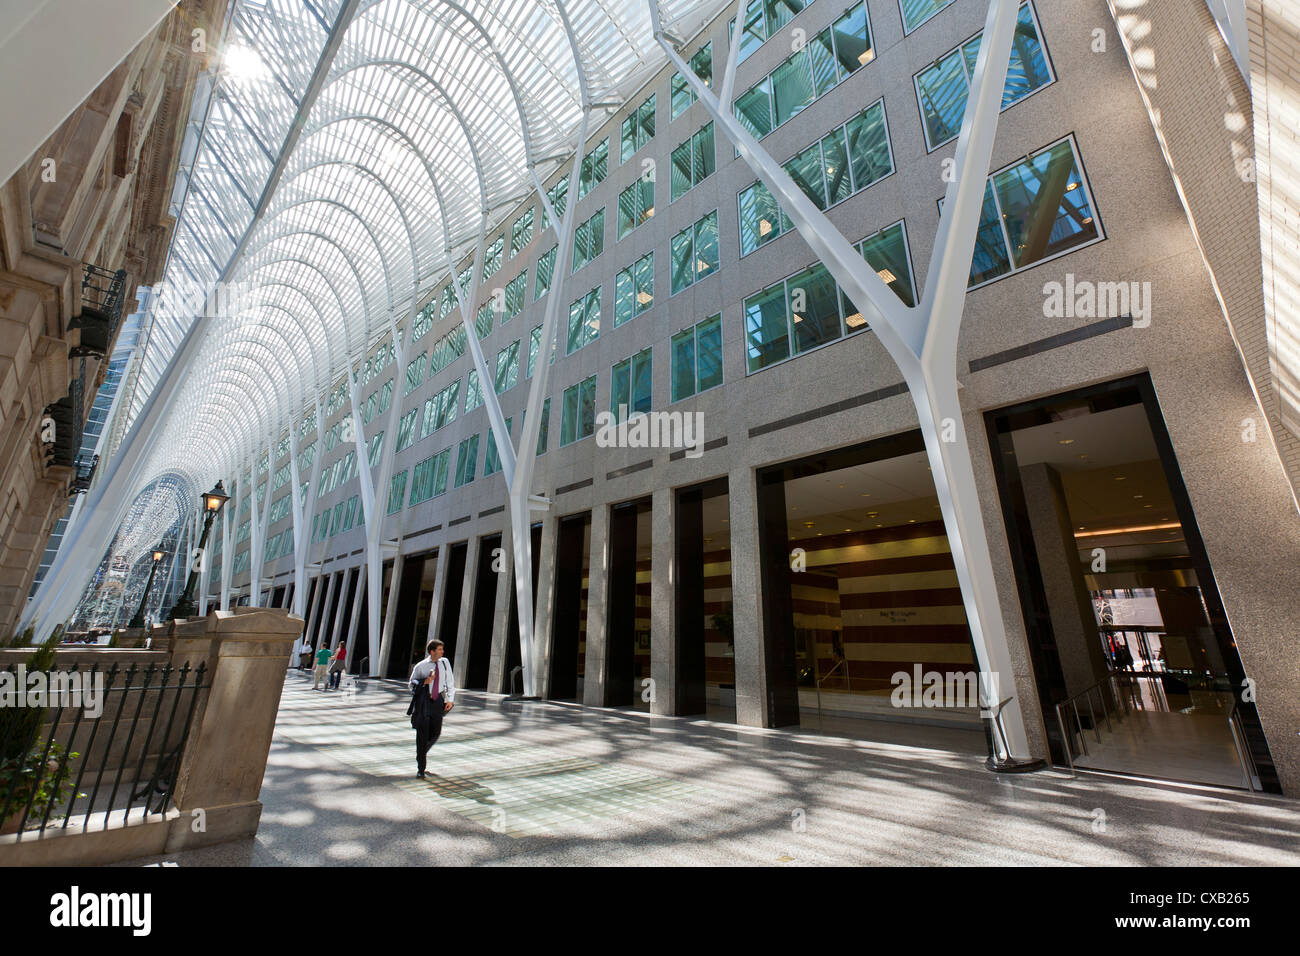 Imprenditore a piedi attraverso la galleria atrium, Brookfield Place, precedentemente noto come BCE Place, Toronto, Ontario, Canada Foto Stock